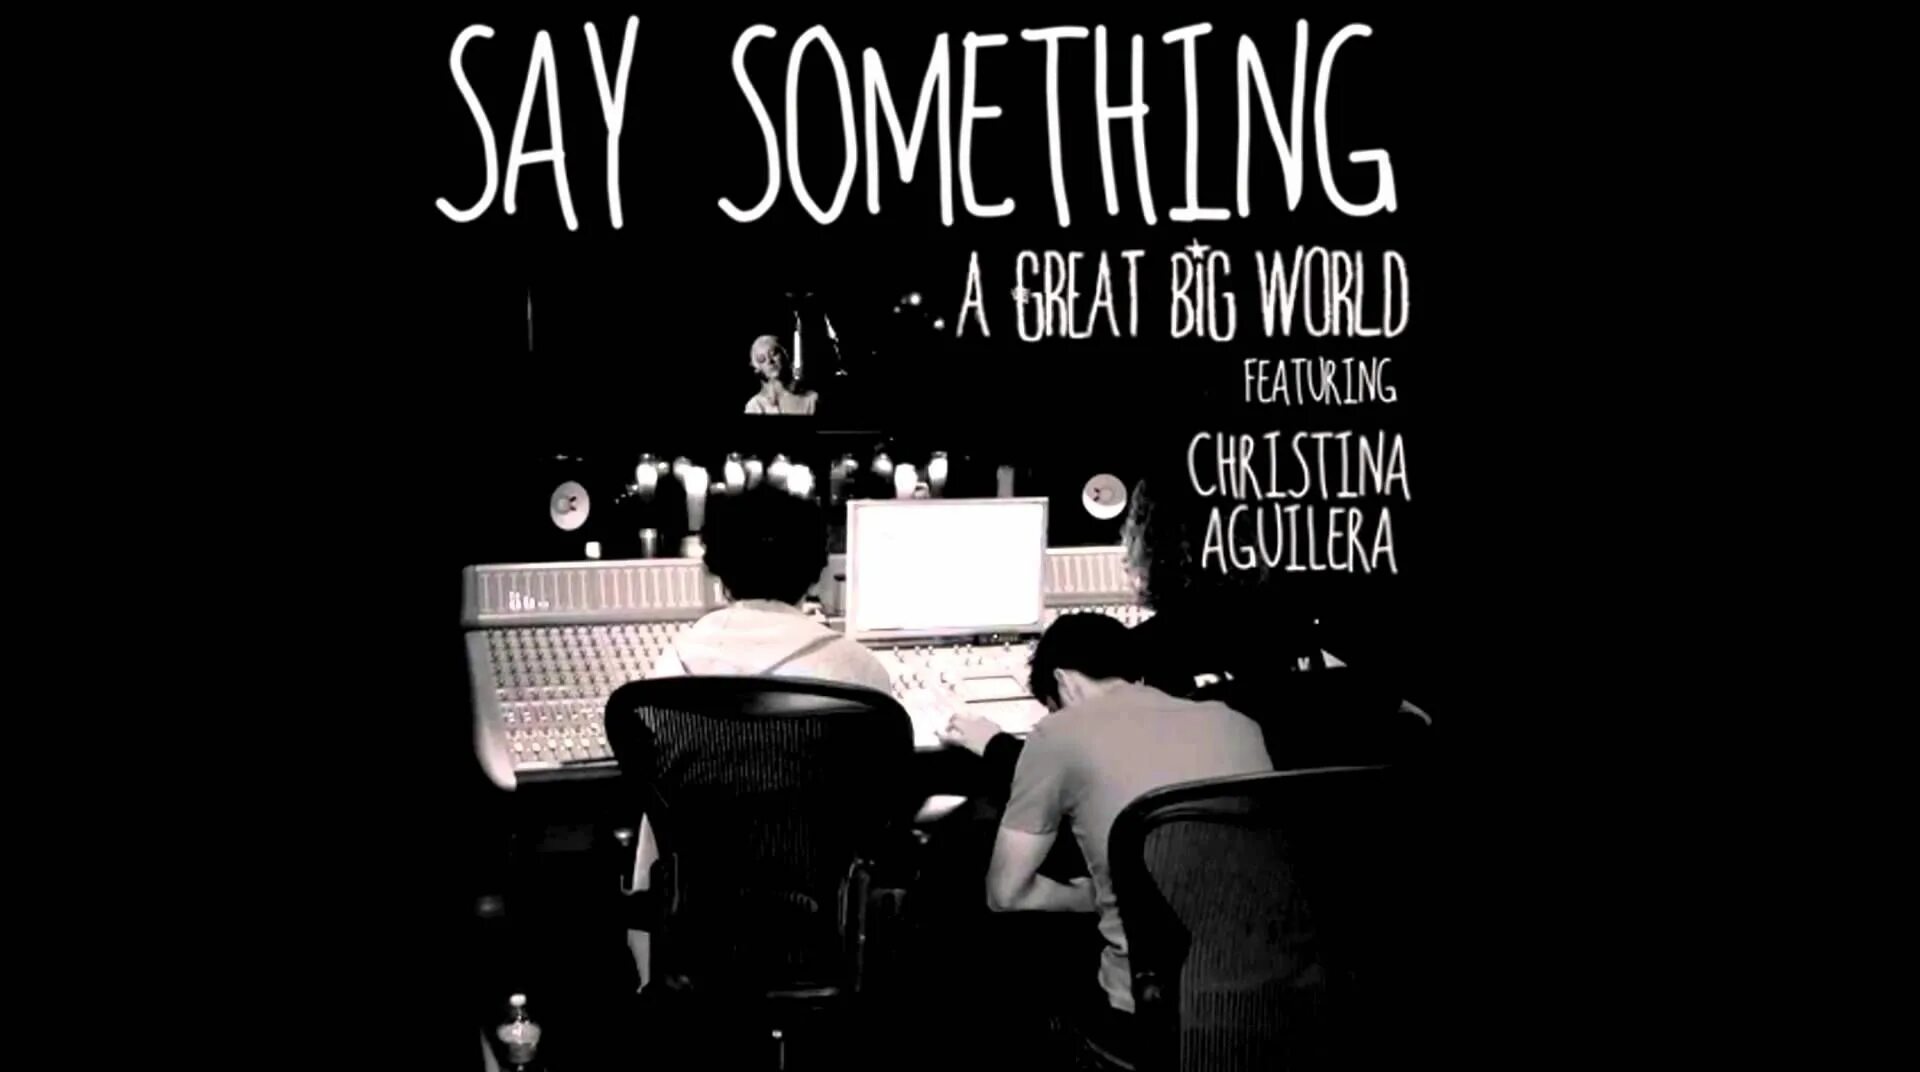 Just say something. Say something Christina Aguilera. A great big World Christina Aguilera. Say something a great big World.